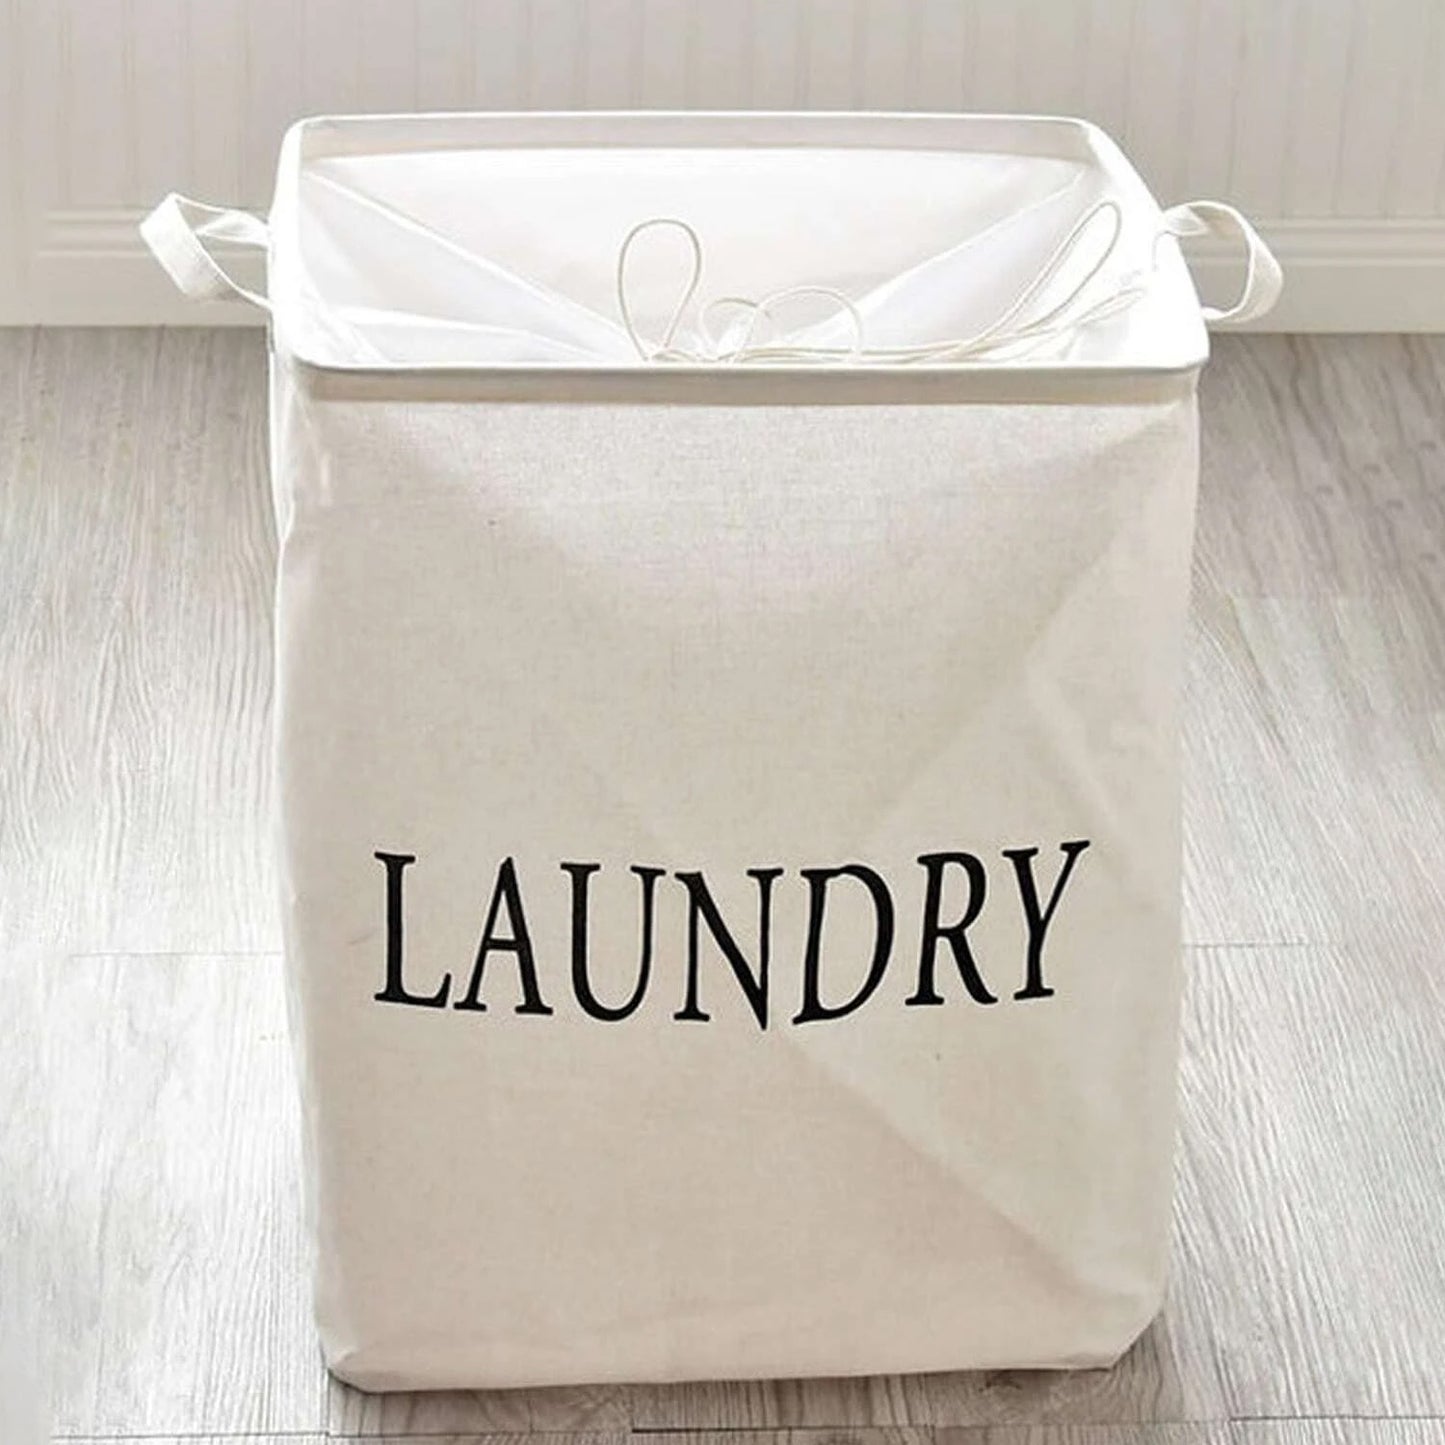 Large Laundry Hamper Bag jute Clothes Storage Baskets Home Clothes Barrel Bags ~ 3528